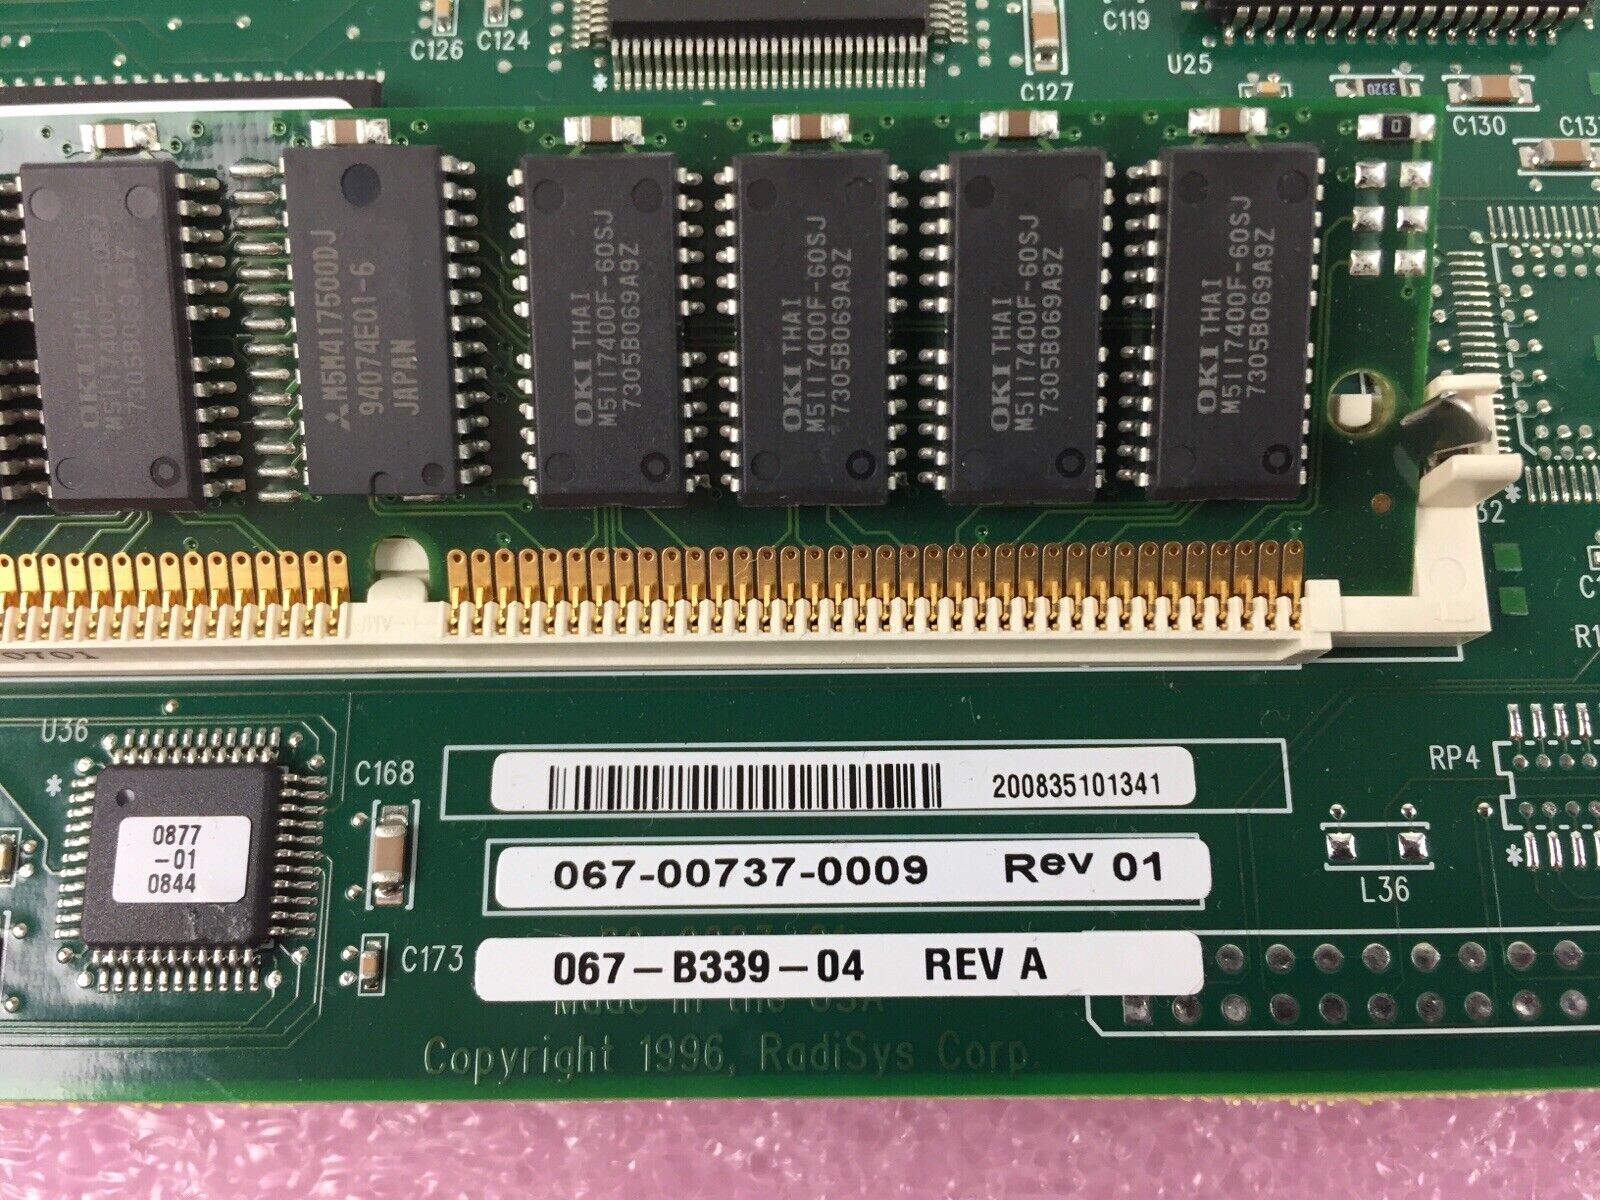 Bayer Switch Assy Board 067-B339-04 - intel i386X